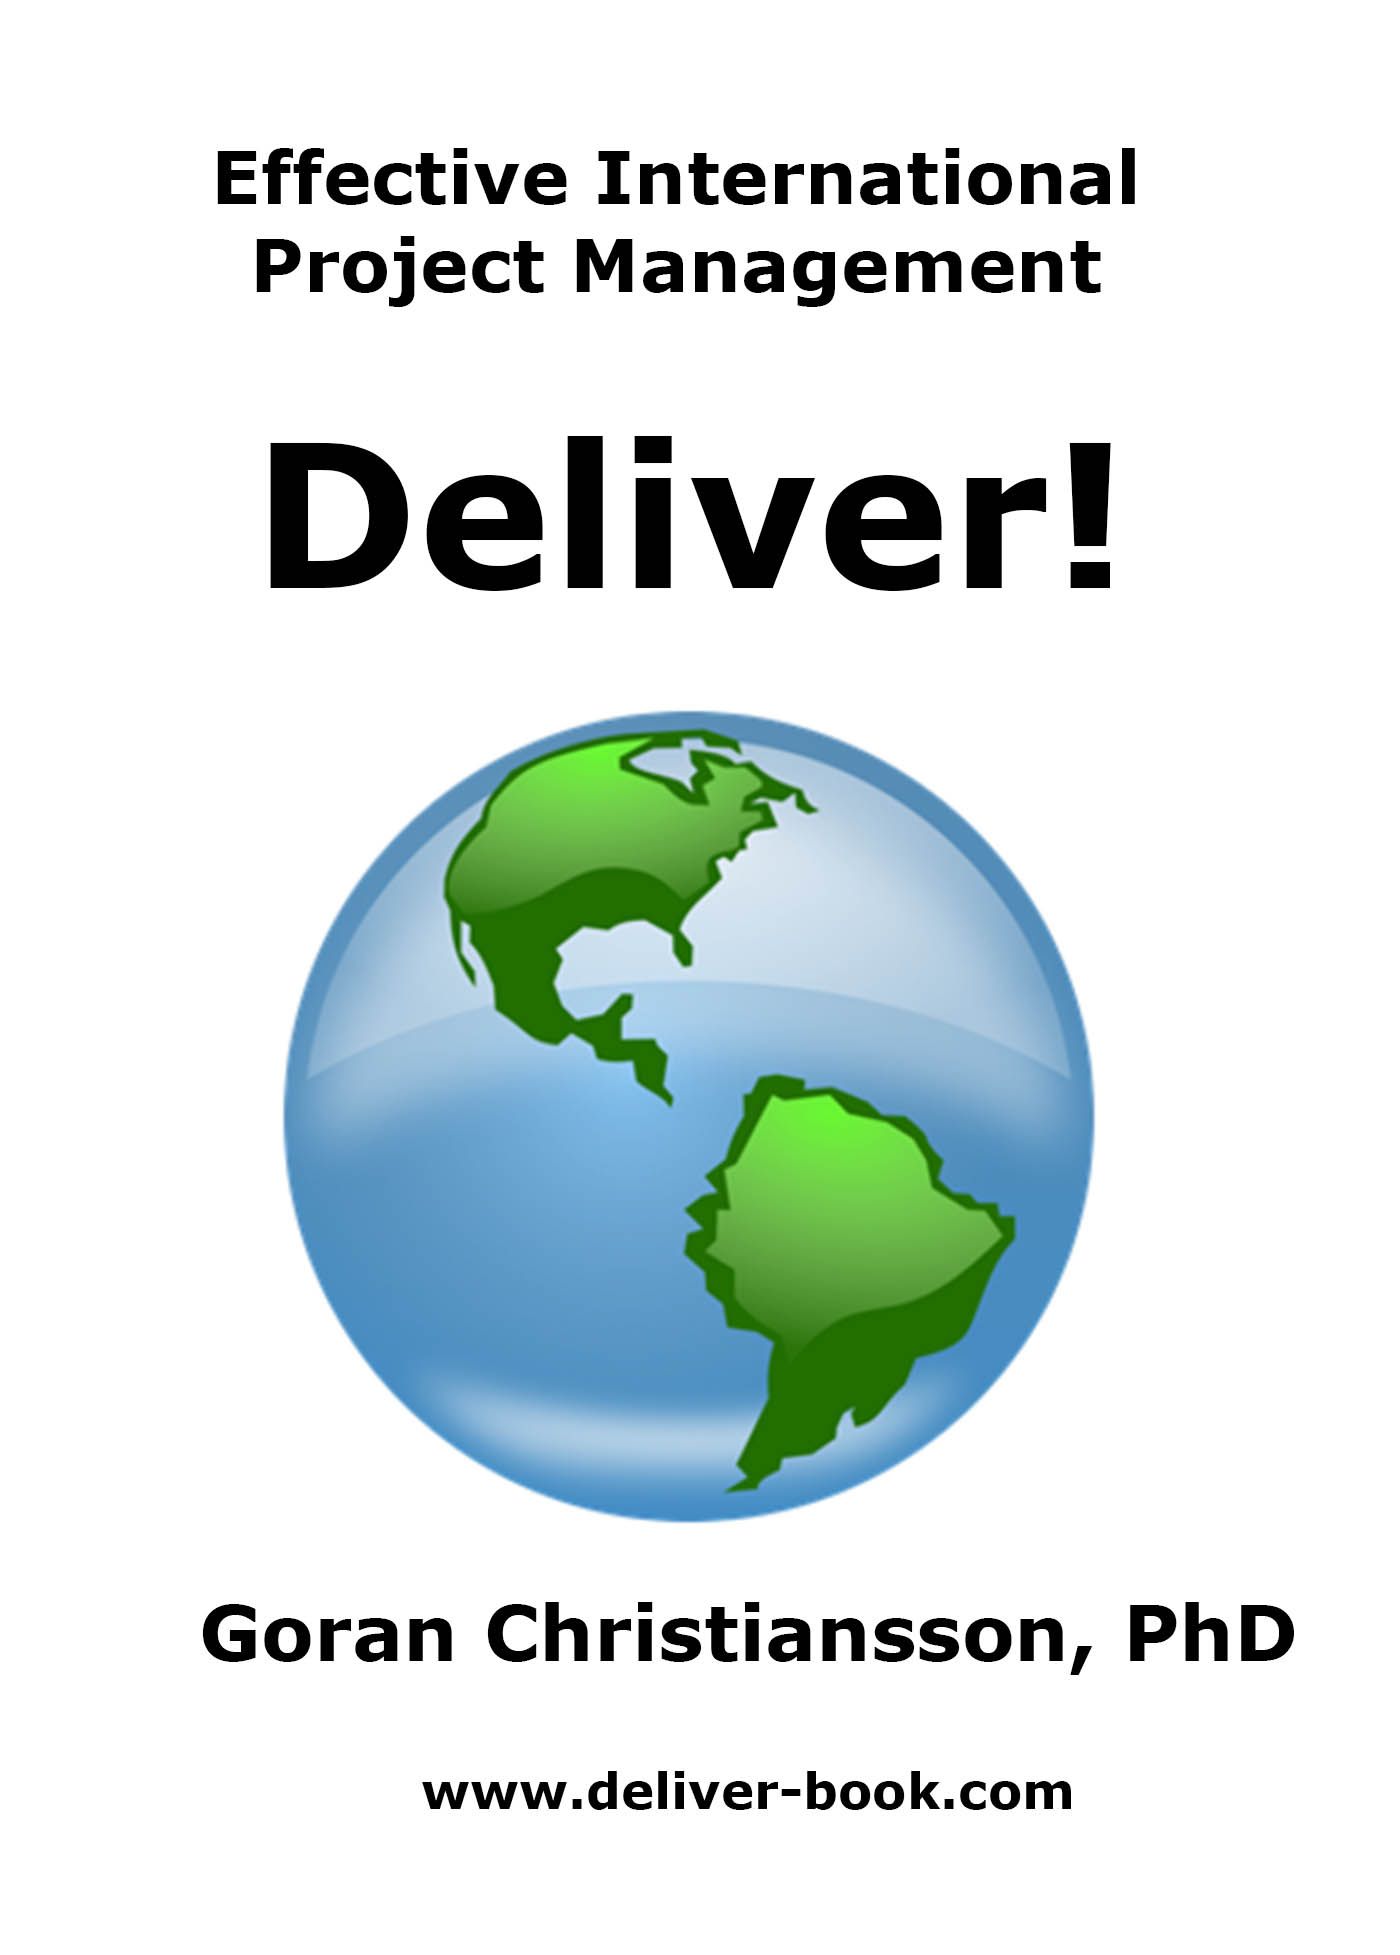 Deliver - Effective International Project Management, eBook by Goran Christiansson